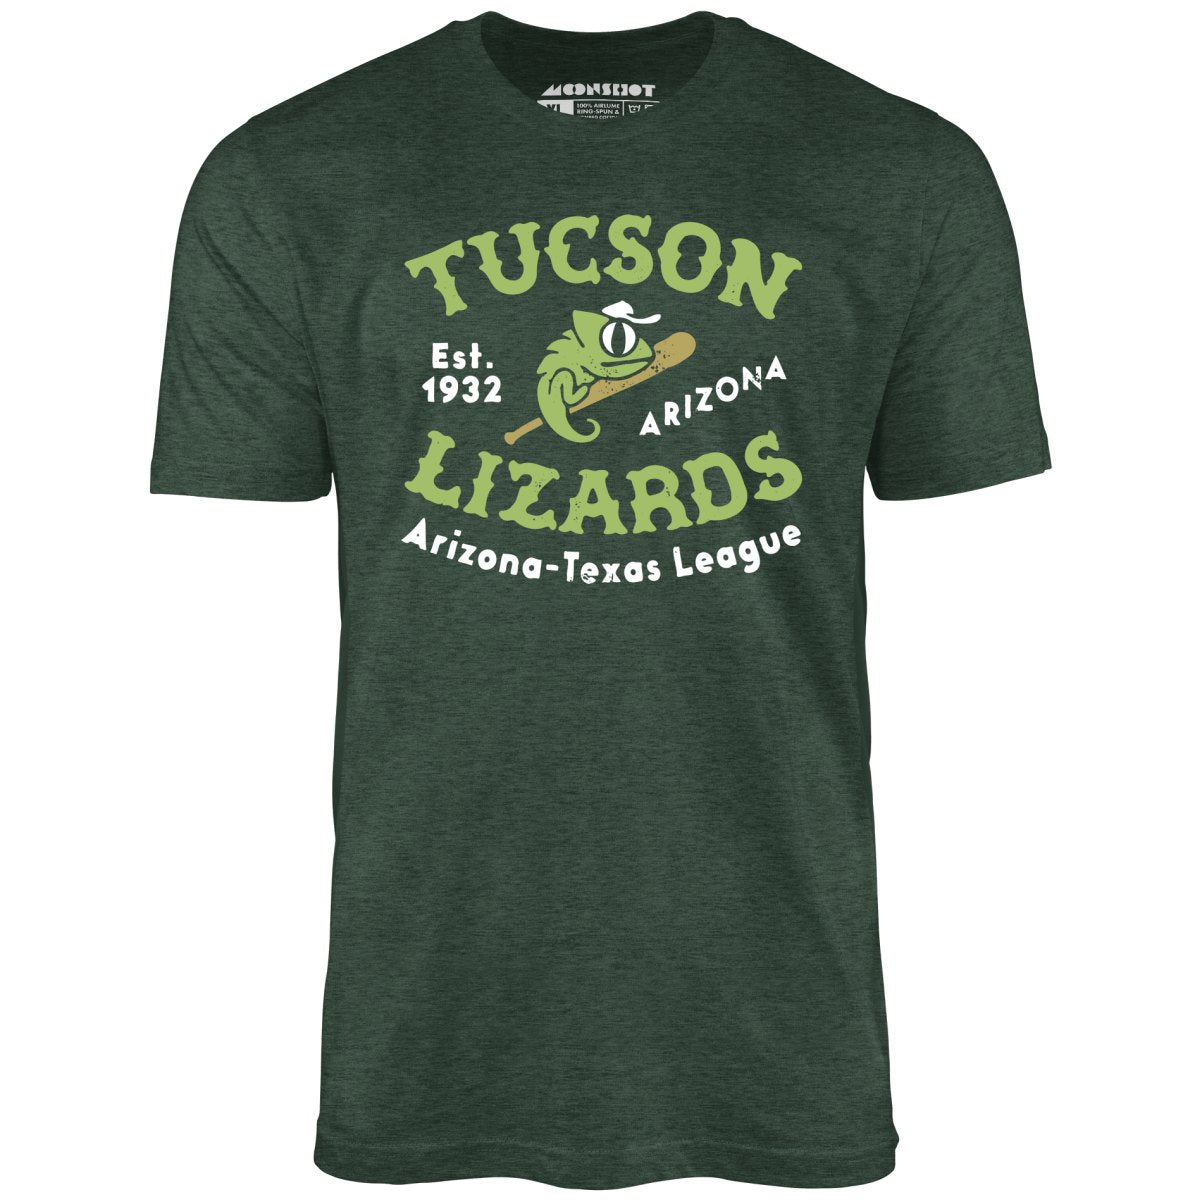 Tucson Lizards - Arizona - Vintage Defunct Baseball Teams - Unisex T-Shirt